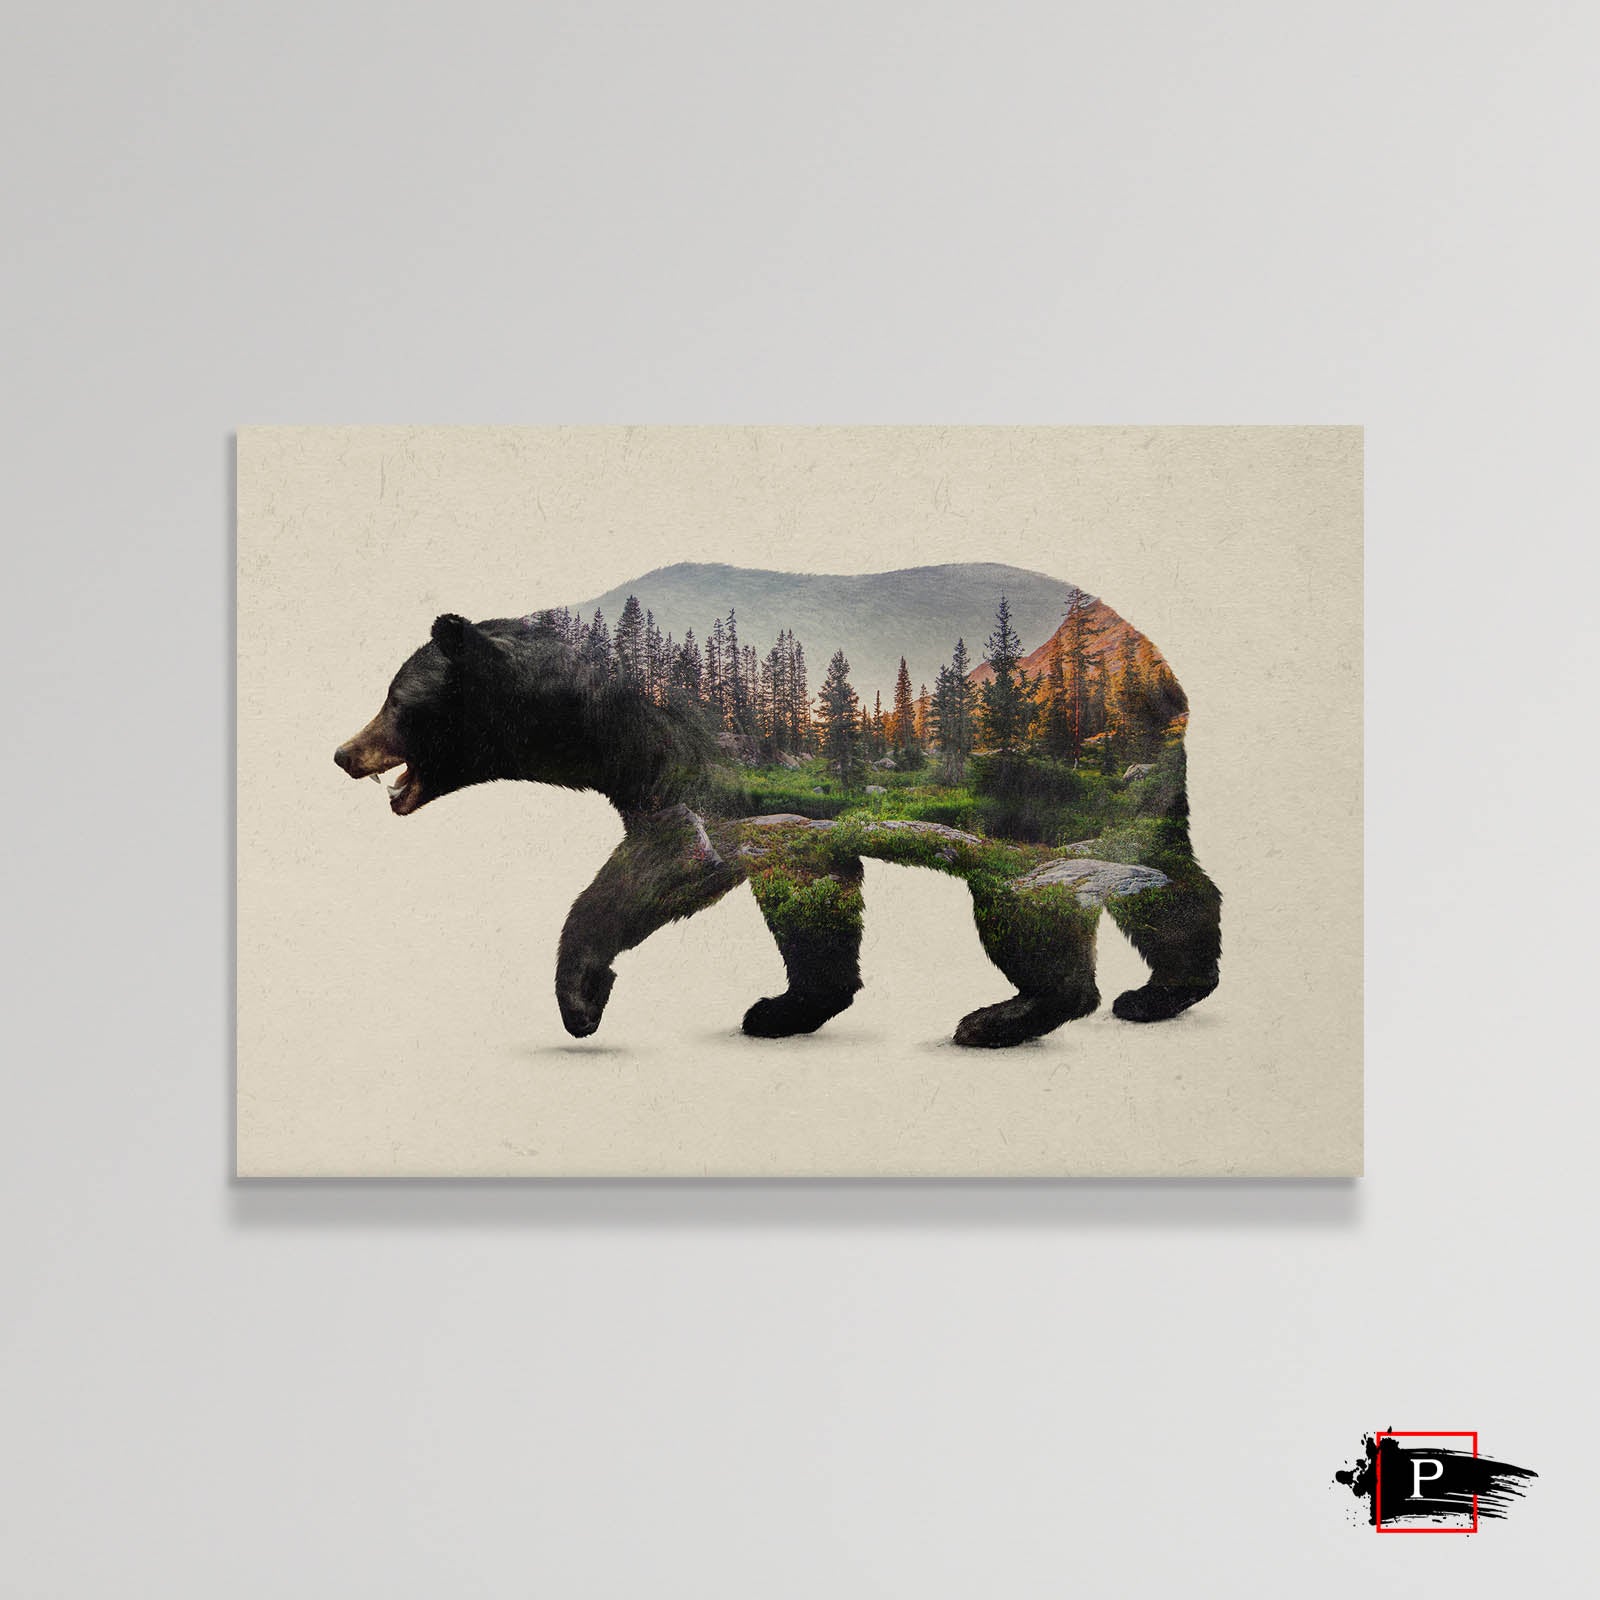 The North American Black Bear